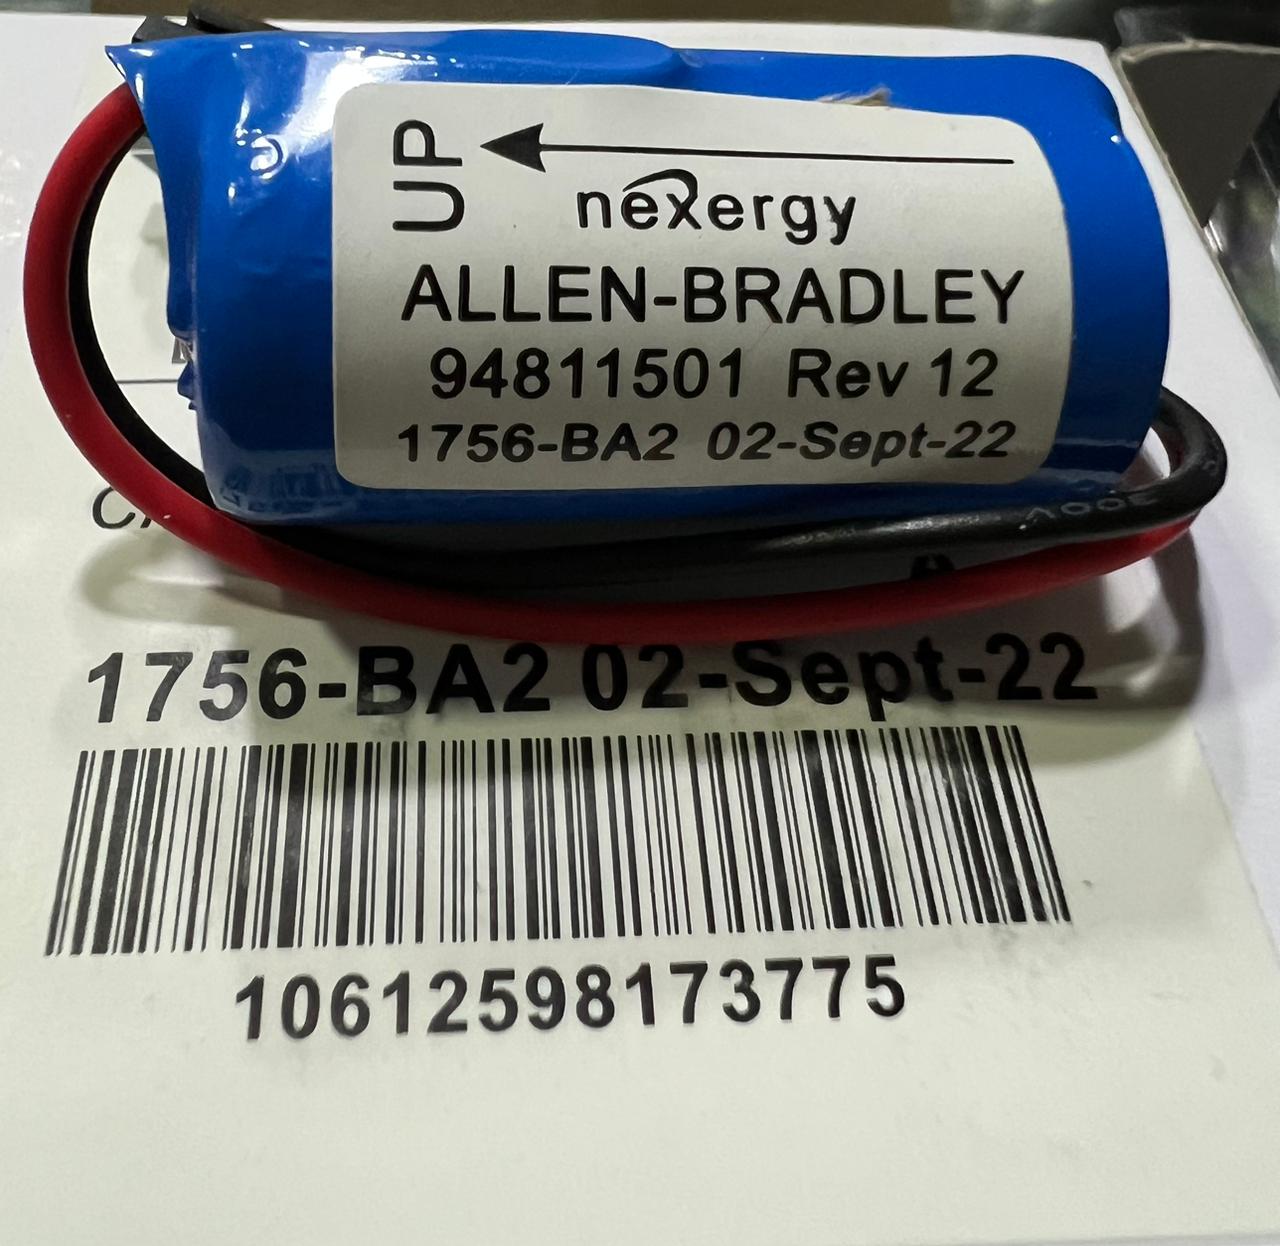 Bateria Allen Bradley 1756-ba2  - Logix 5550 COM CABO E CONECTOR